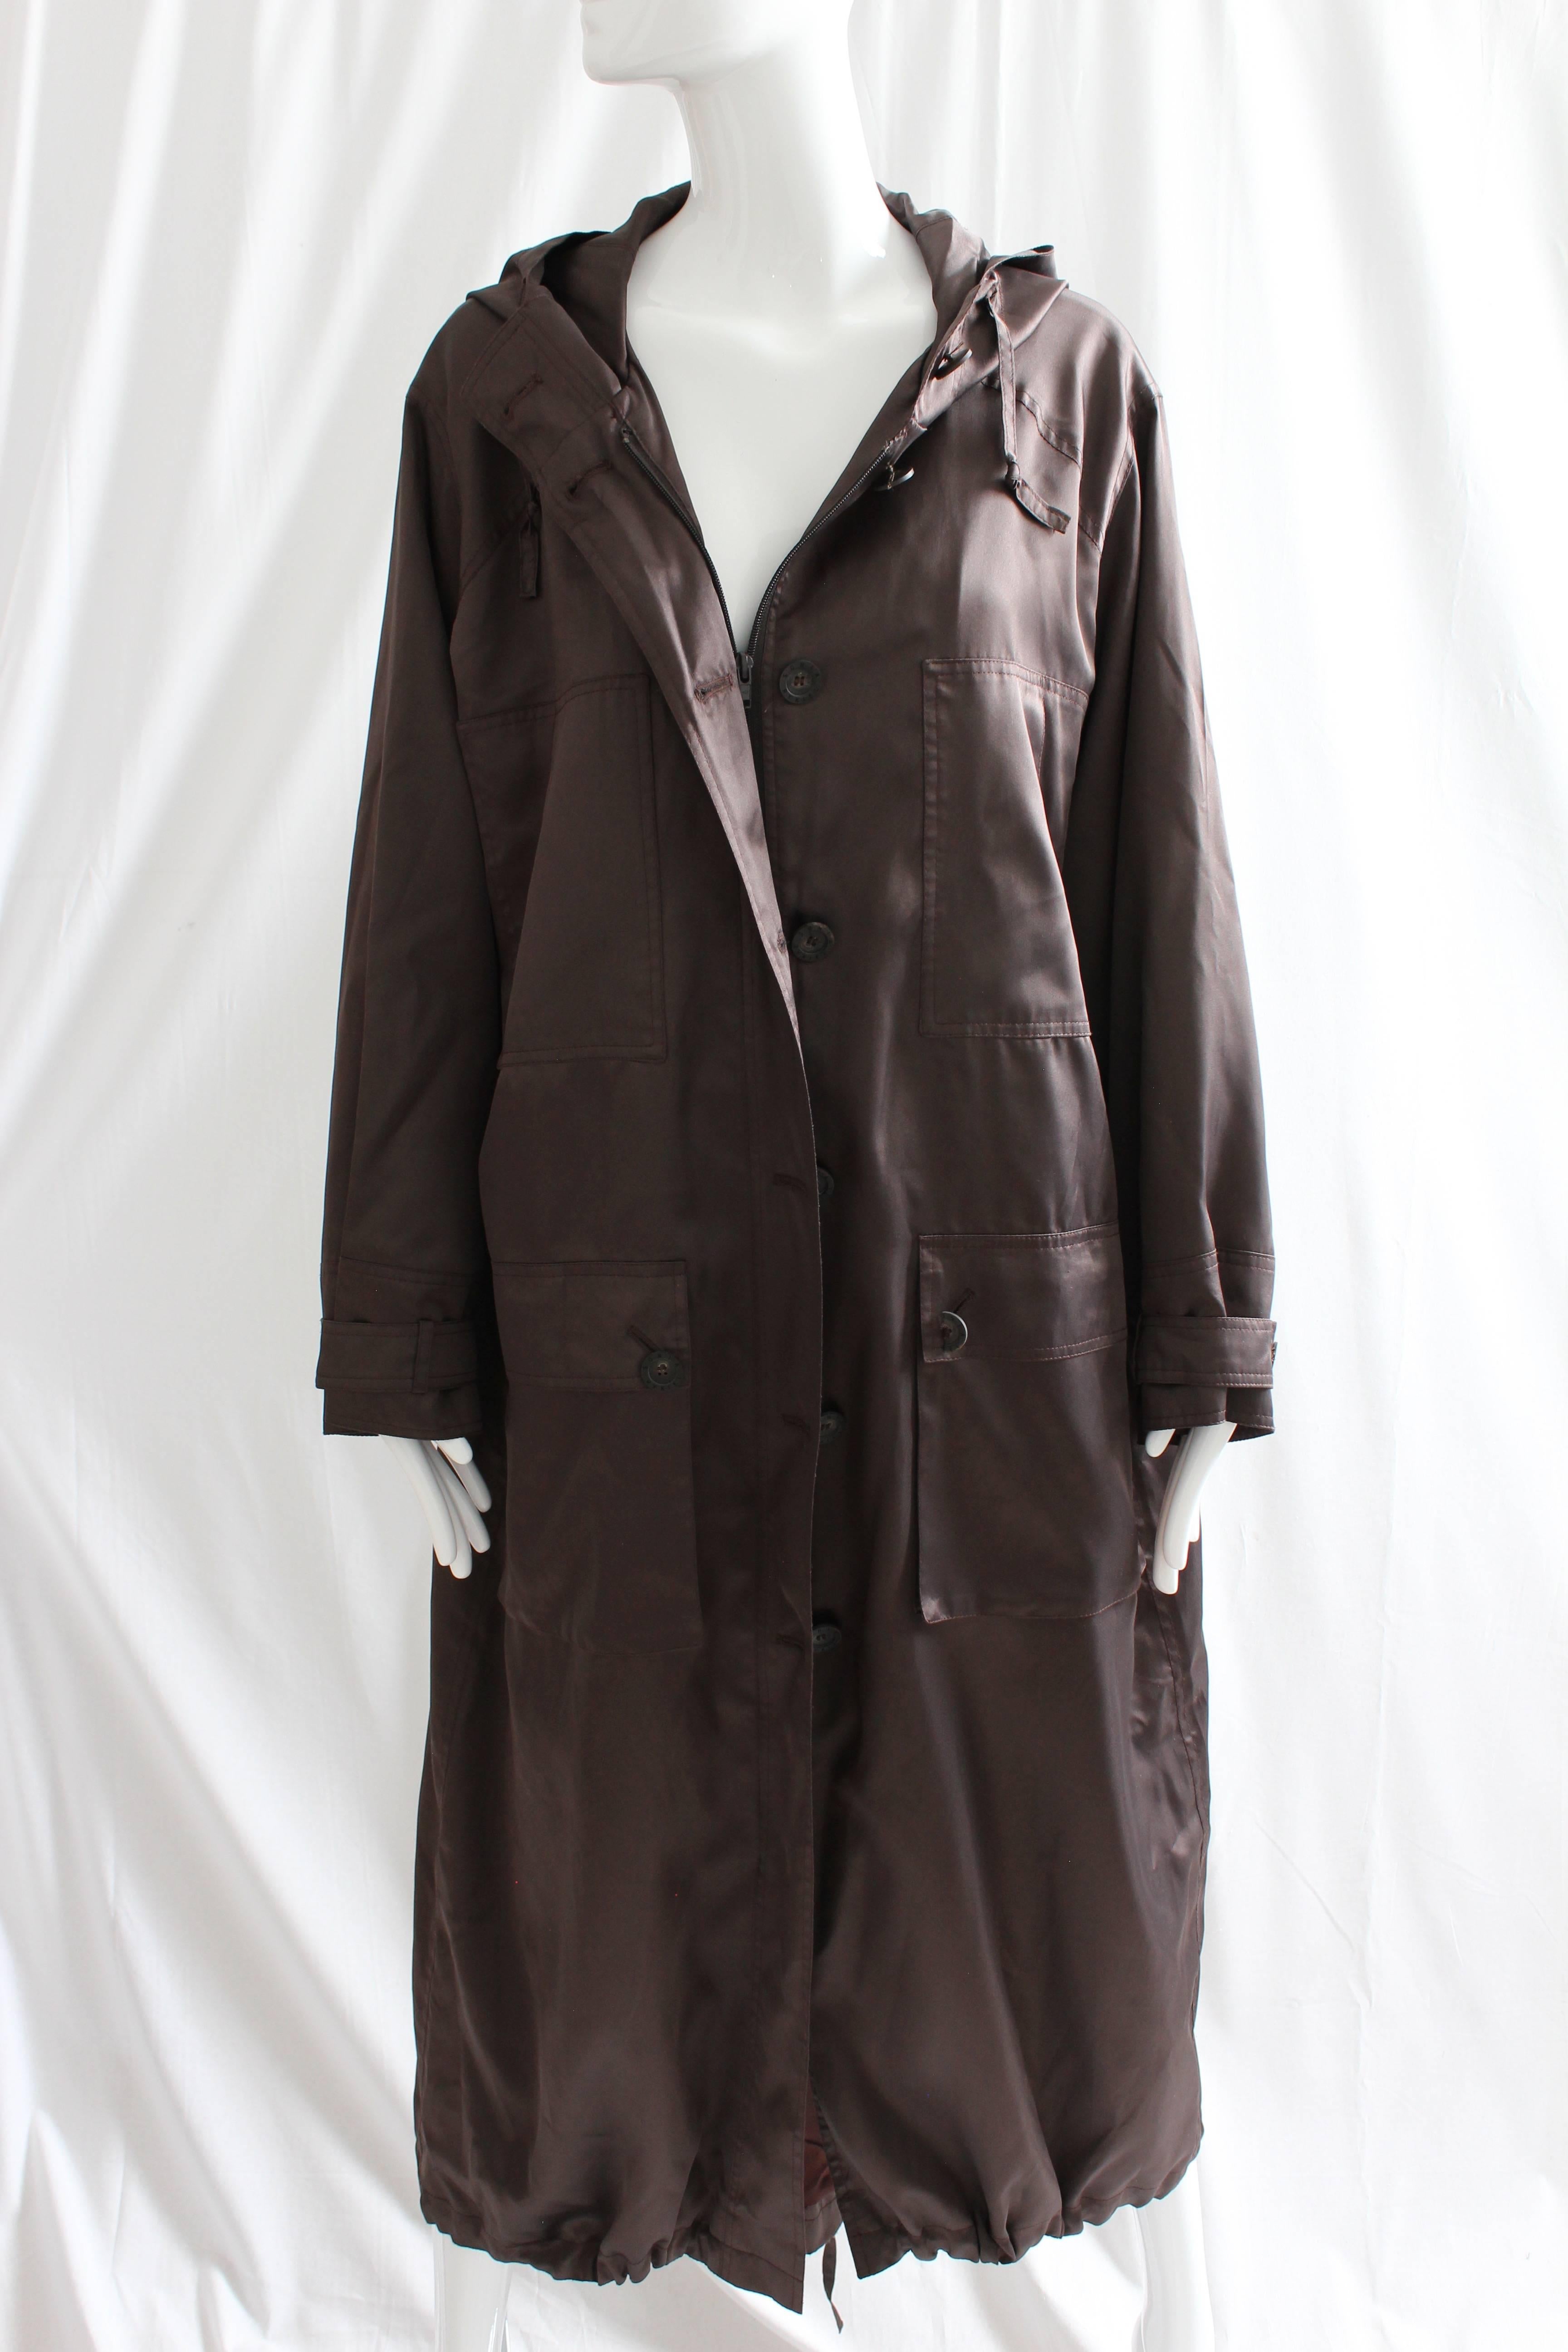 Sonia Rykiel Brown Satin Trench Coat with Hood, 1990s  7